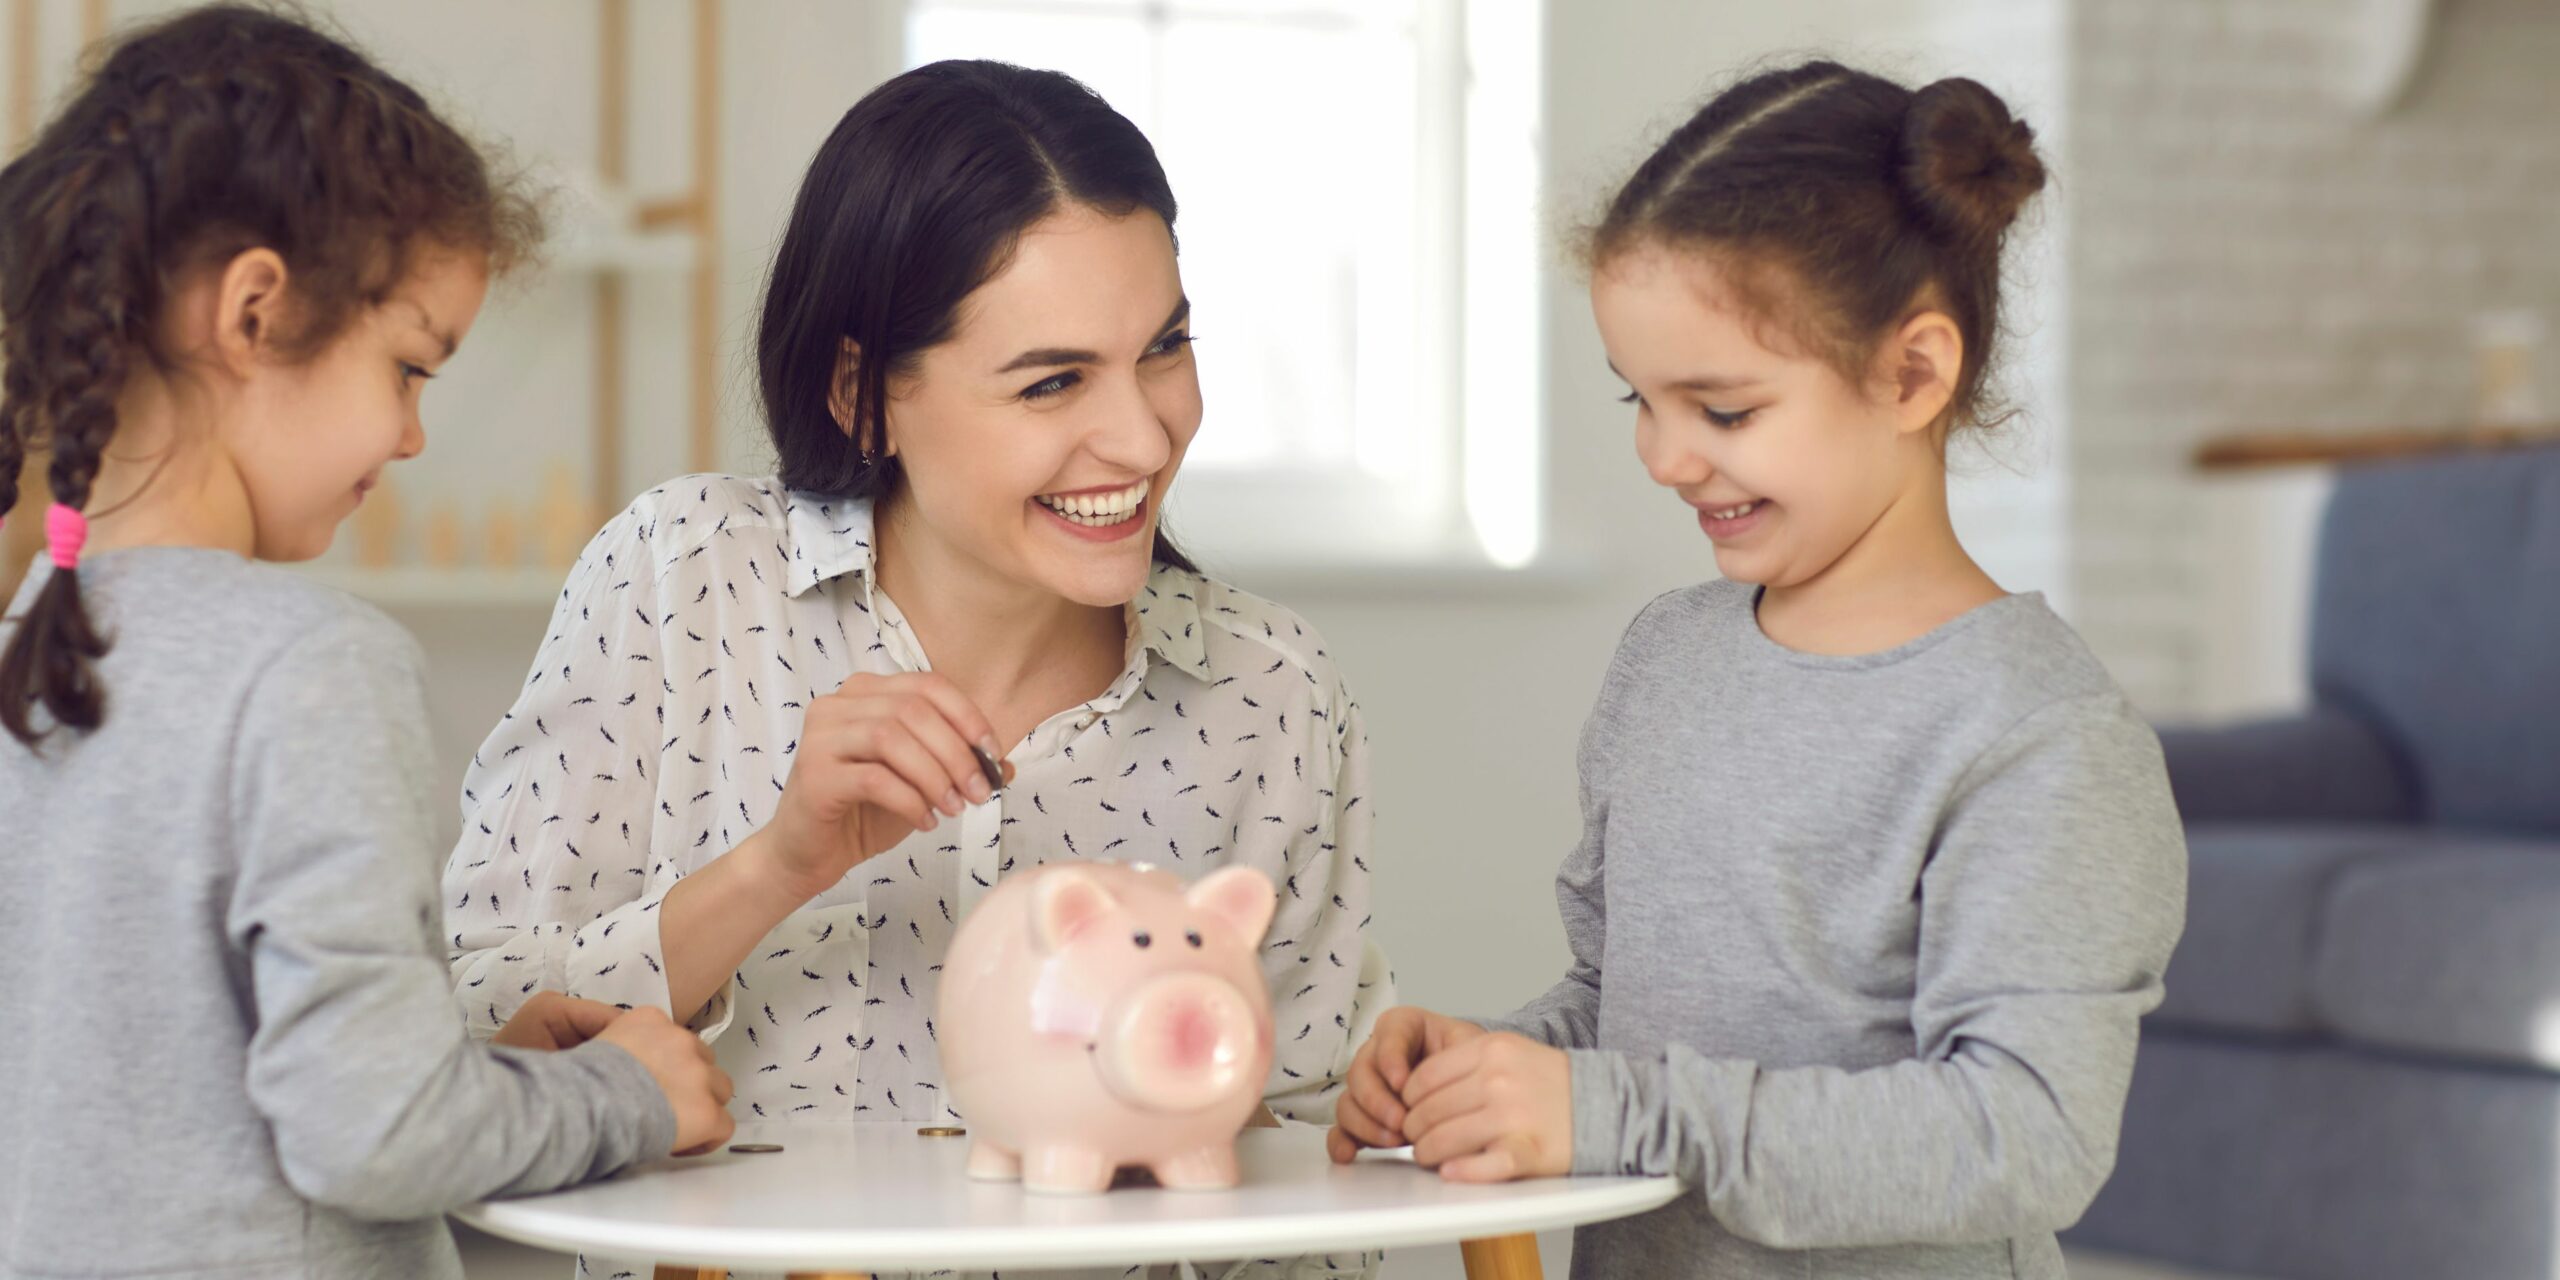 Teaching children healthy money habits